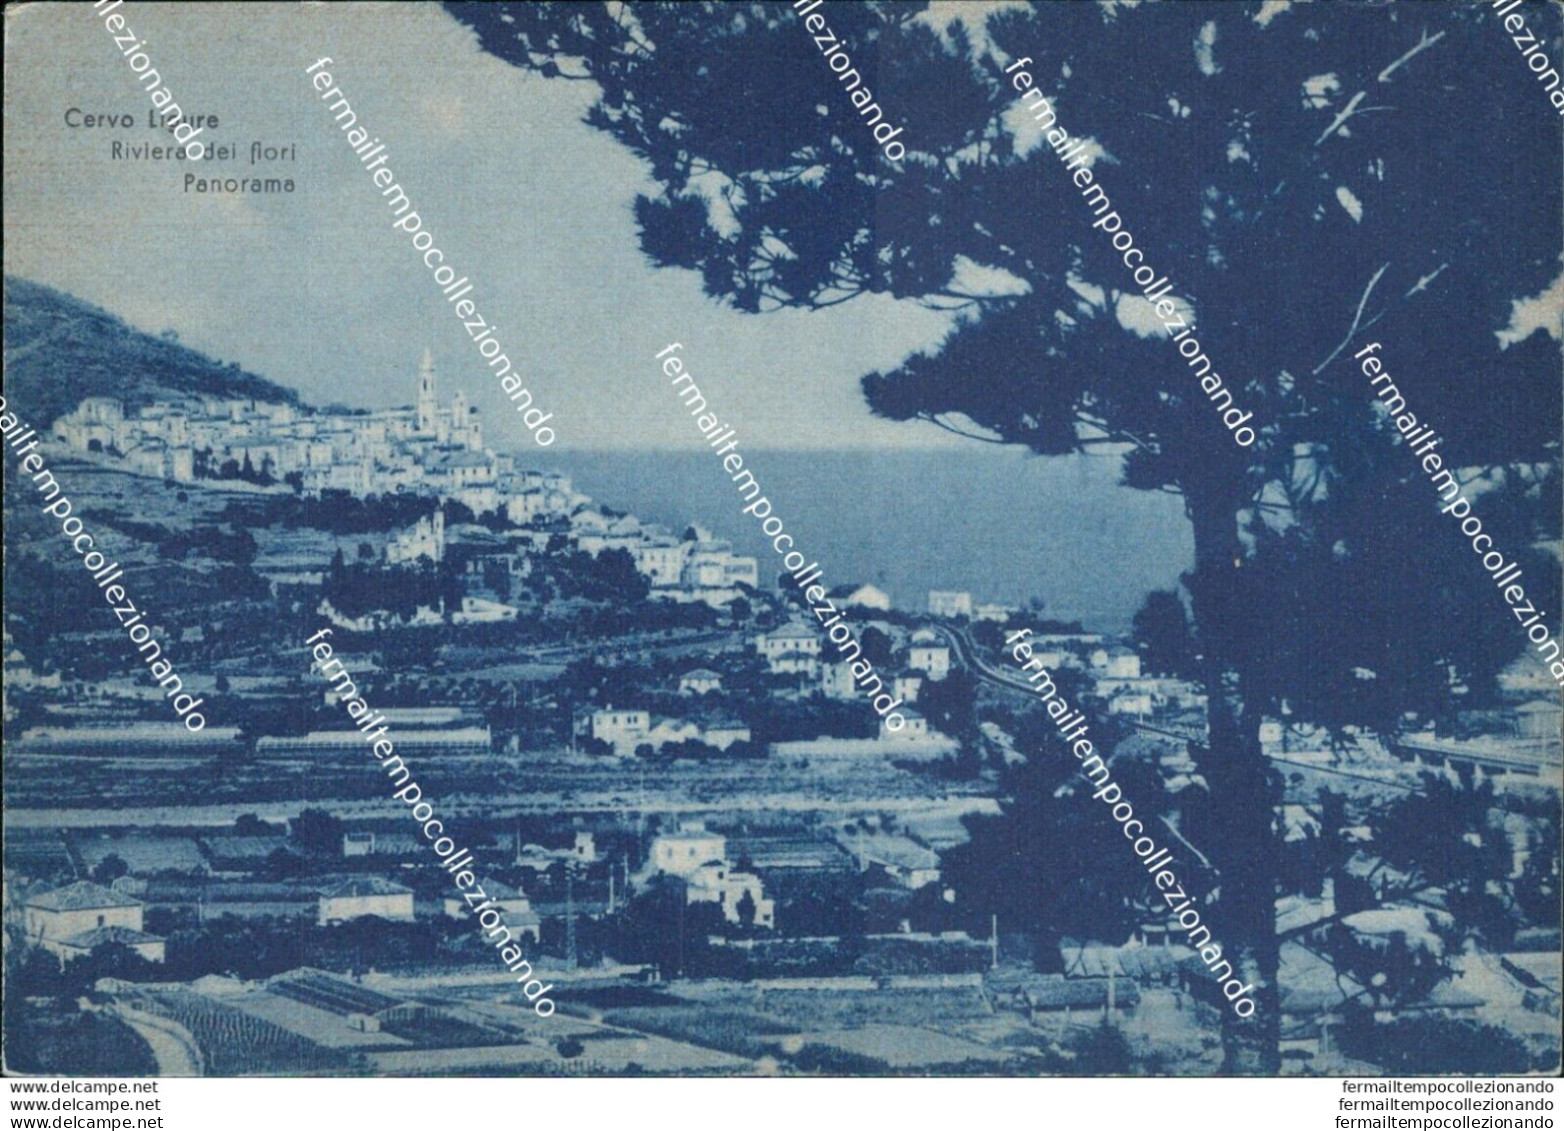 Br545 Cartolina Cervo Ligure Riviera Dei Fiori Panorama Imperia Liguria - Imperia